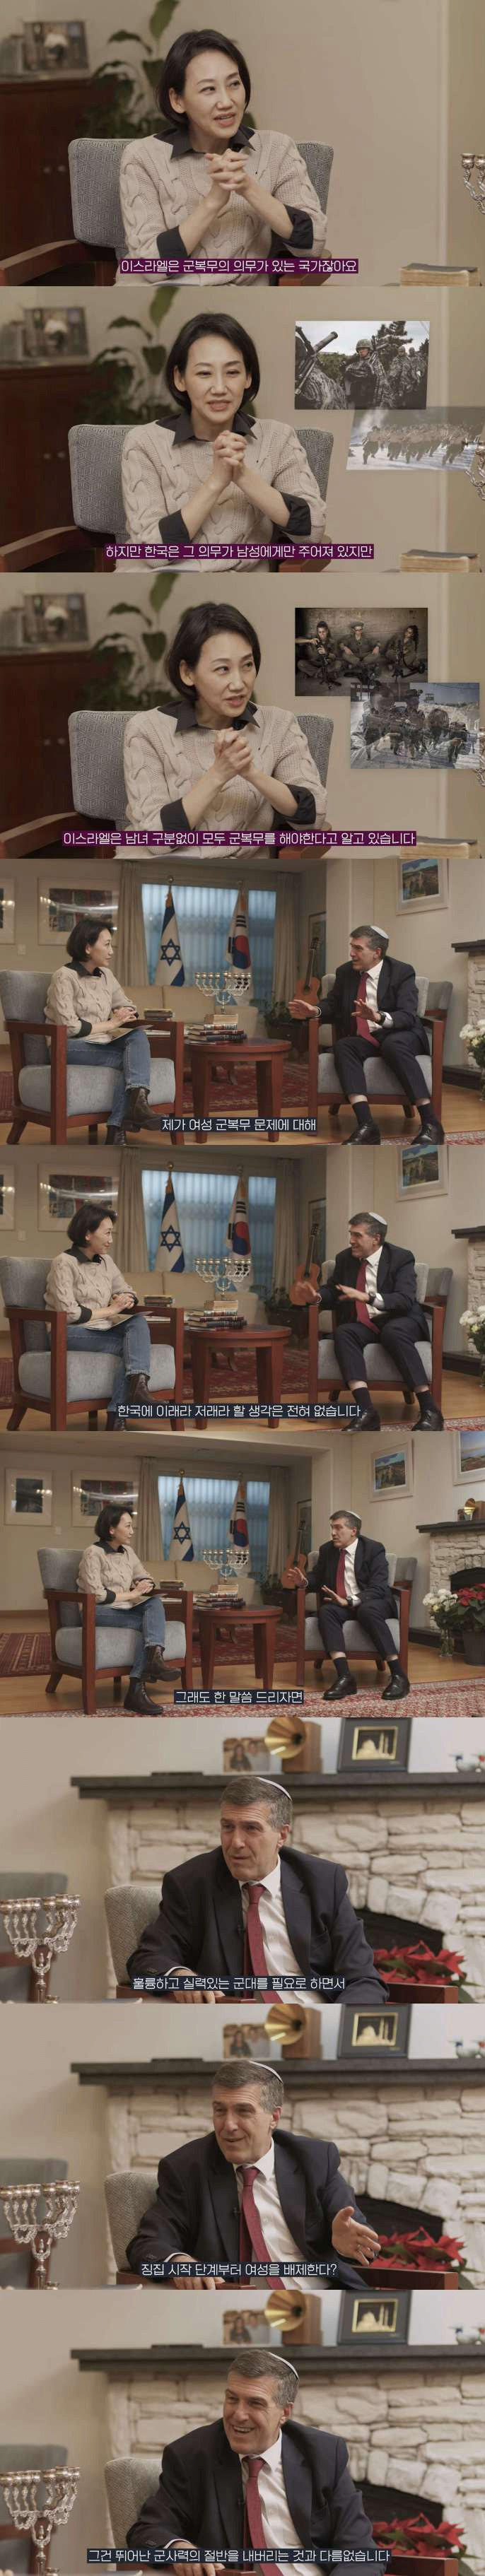 Israeli ambassador to Korea's invasion of the conscription system in Korea.